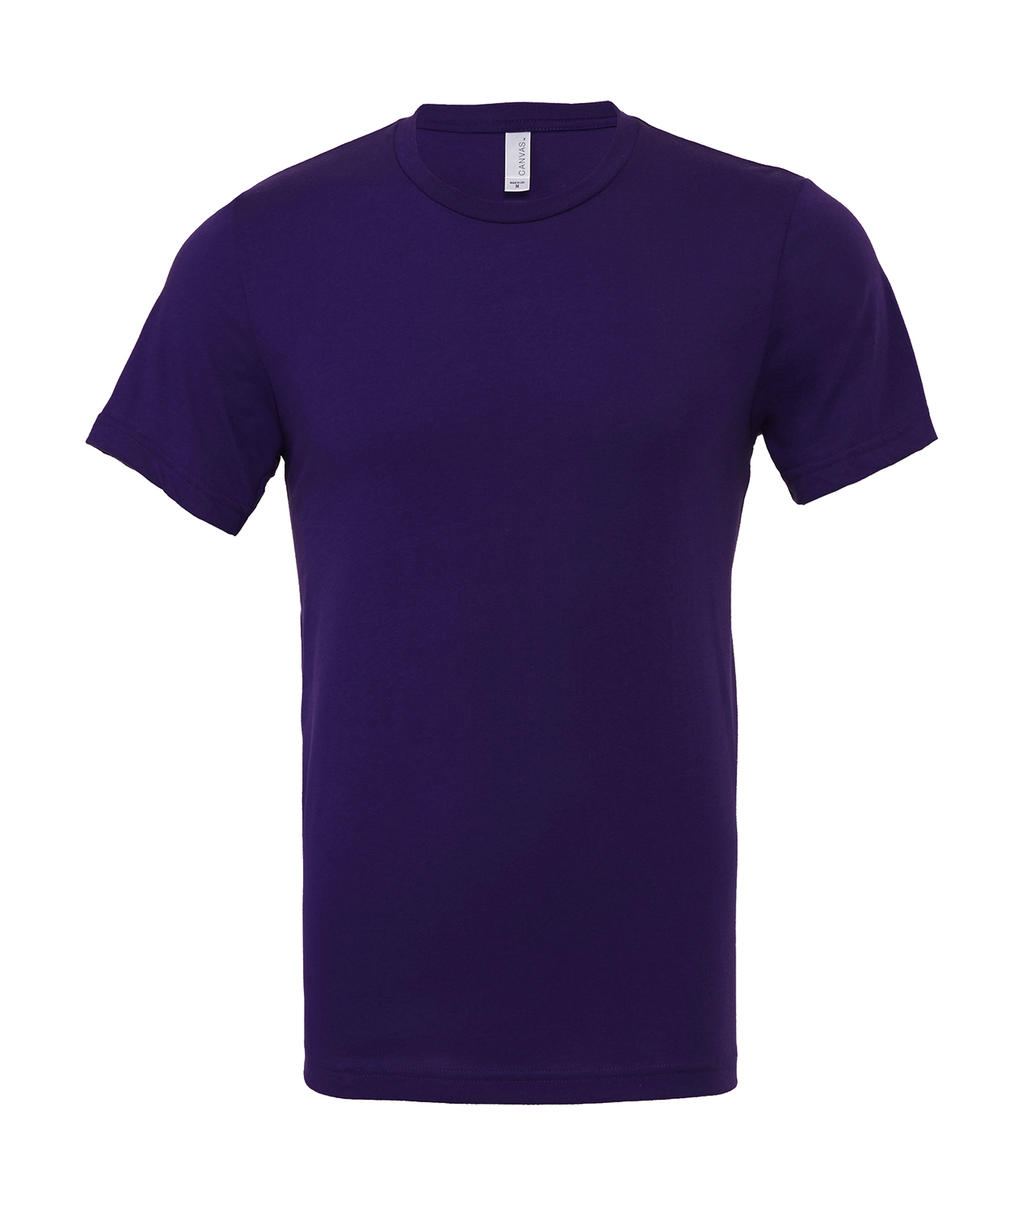 Tričko Unisex Jersey - team purple